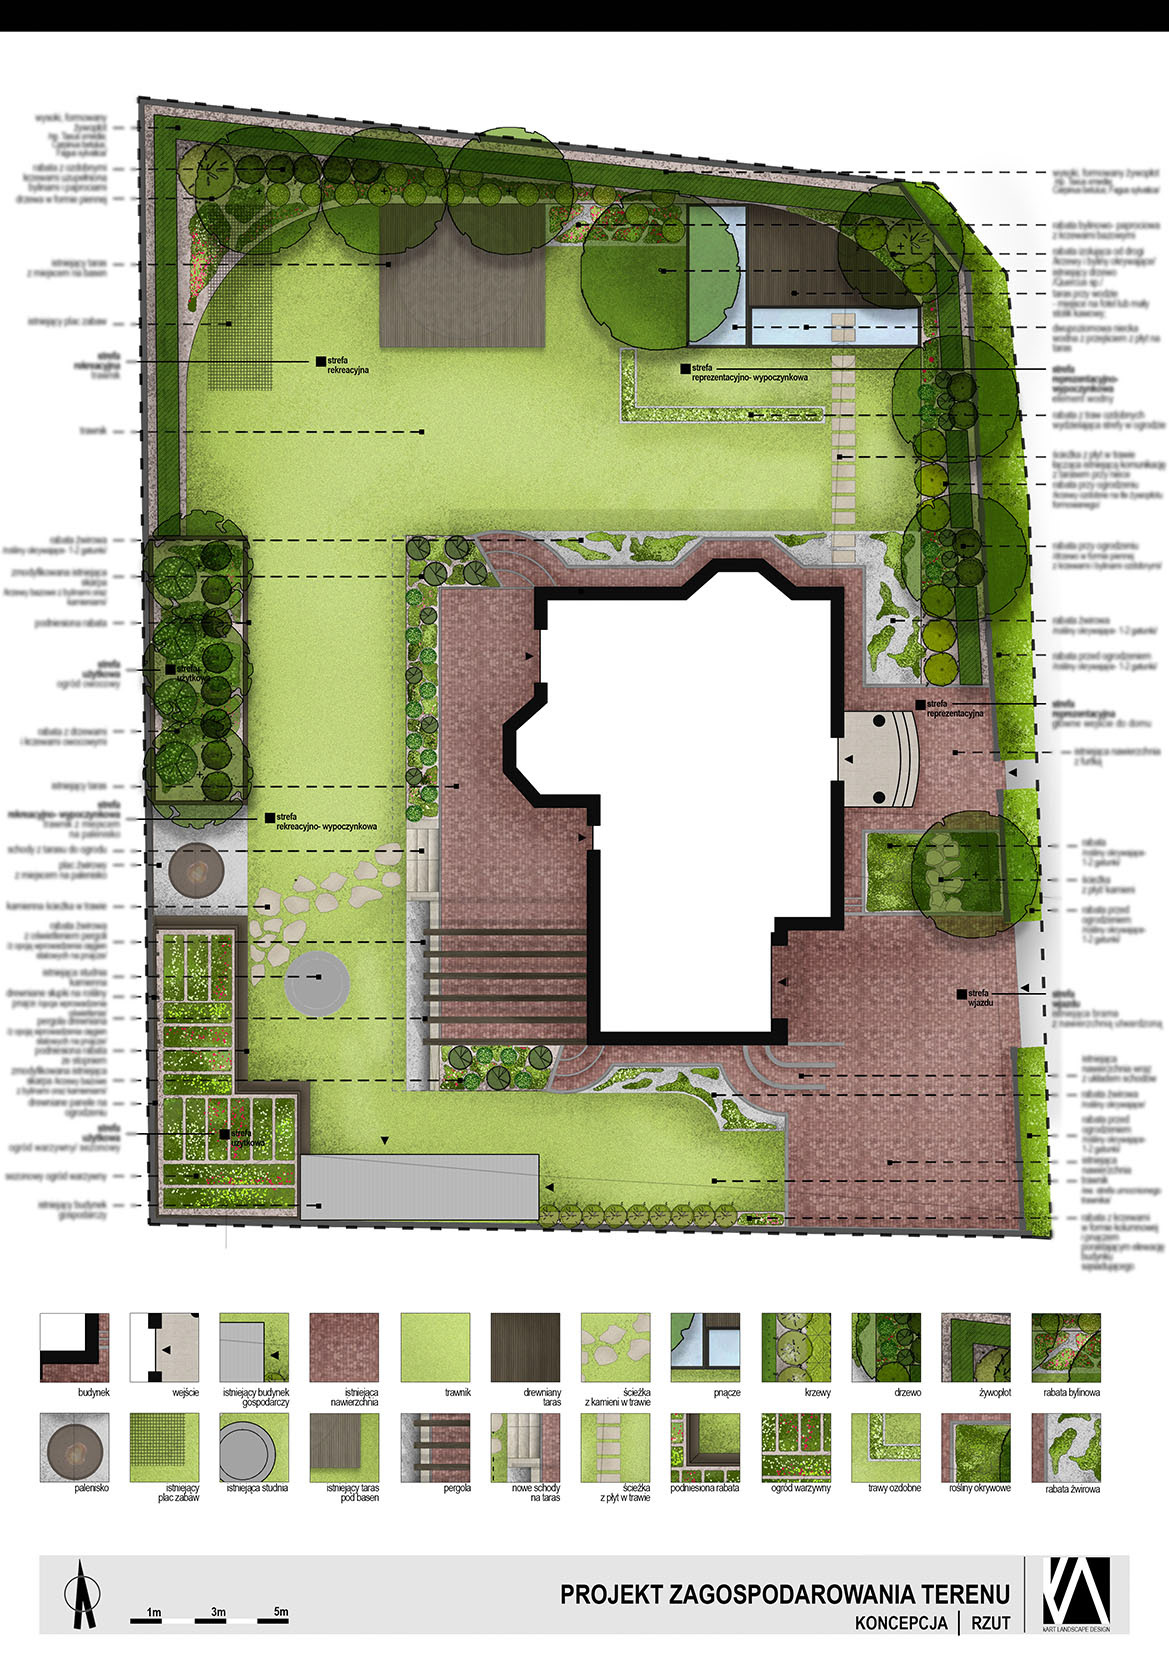 Landscape landscapedesign garden gardenprojekt Plant landscapearchitecture Gardenarchitecture